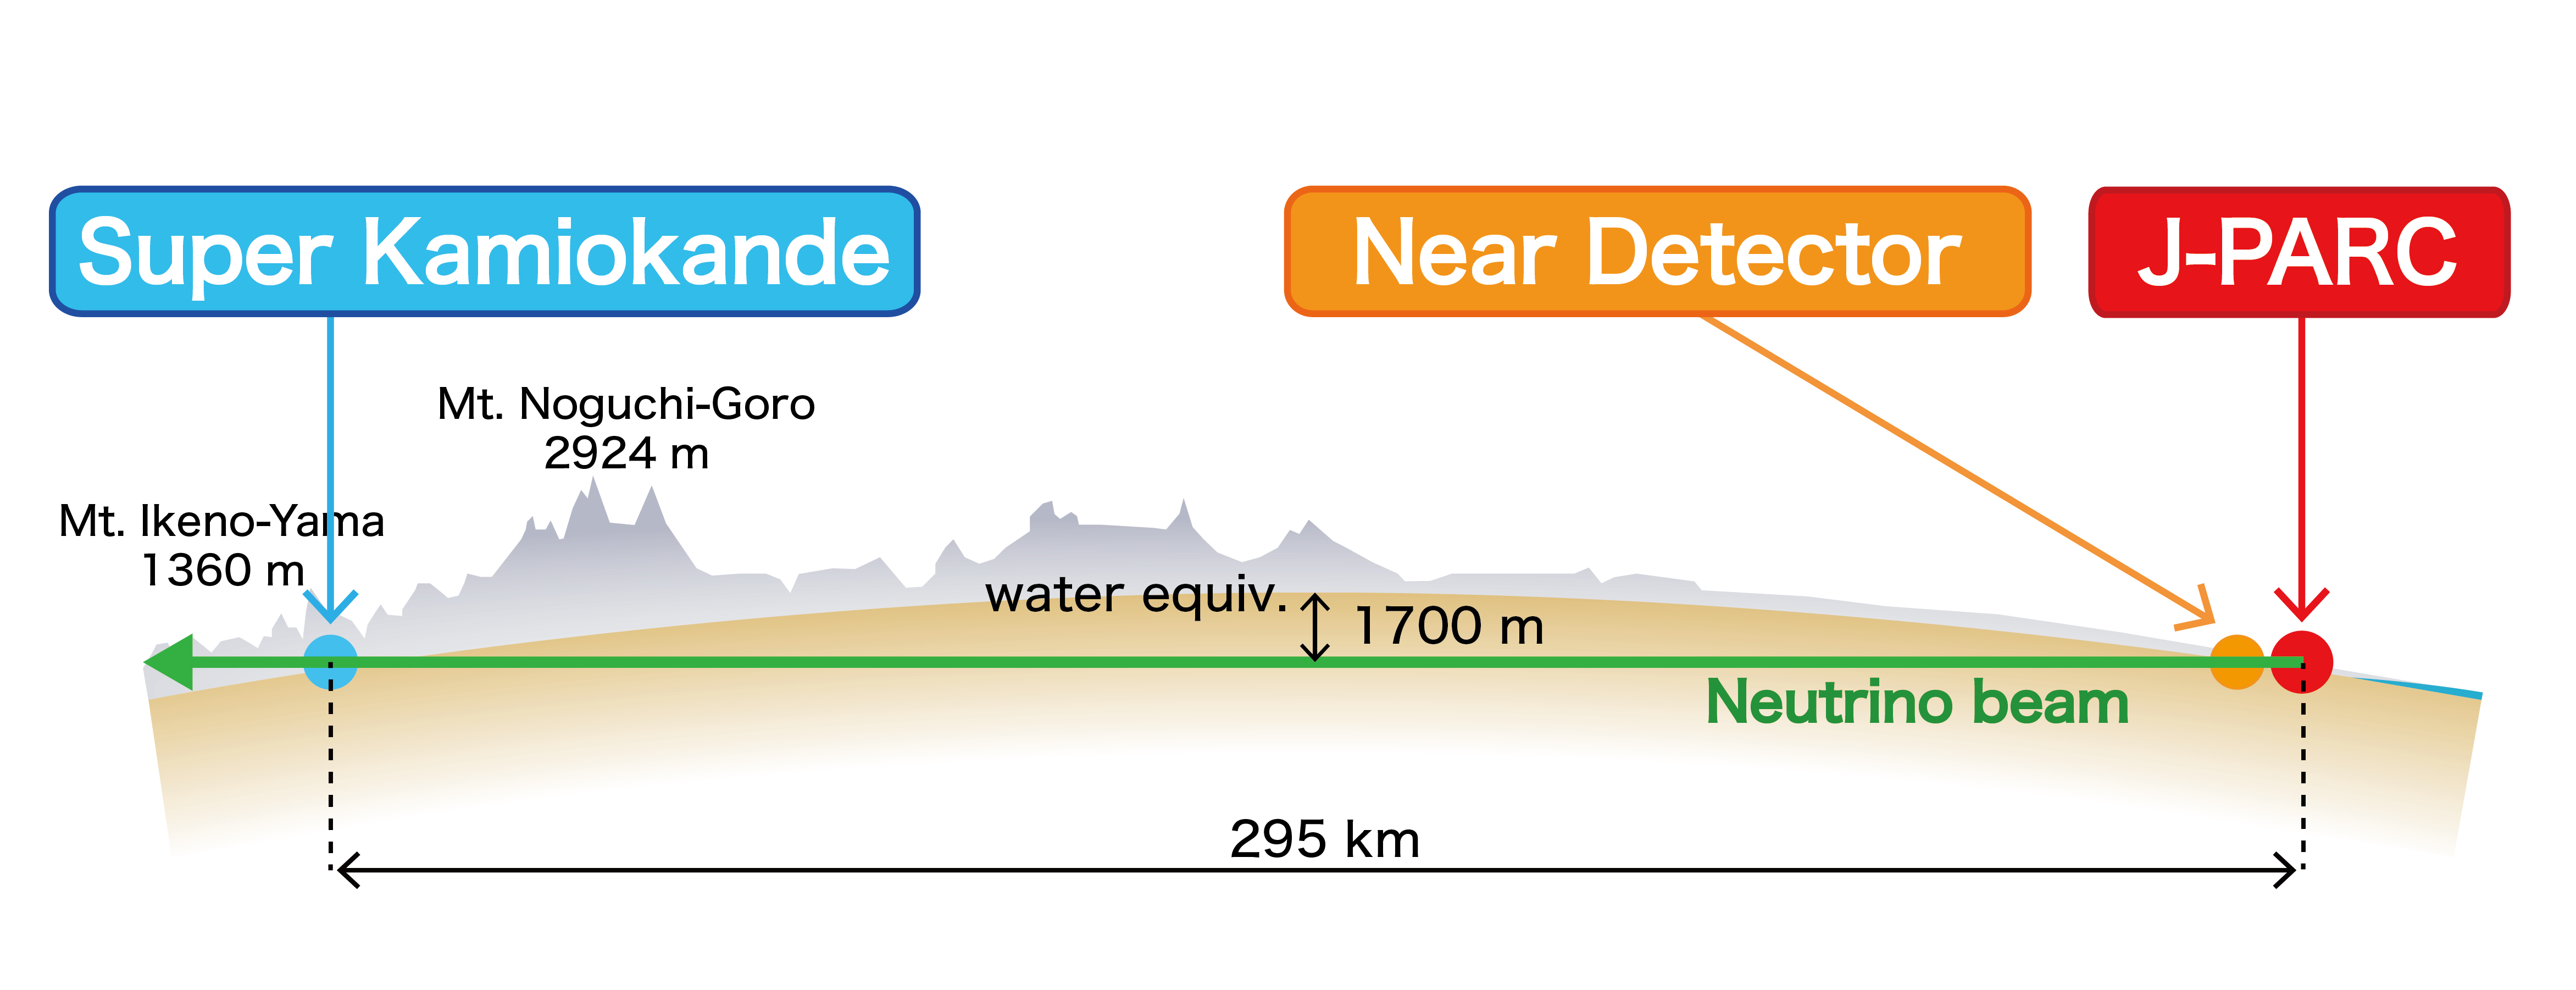 Passage of the muon neutrino beam from J-PARC to Super Kamiokande